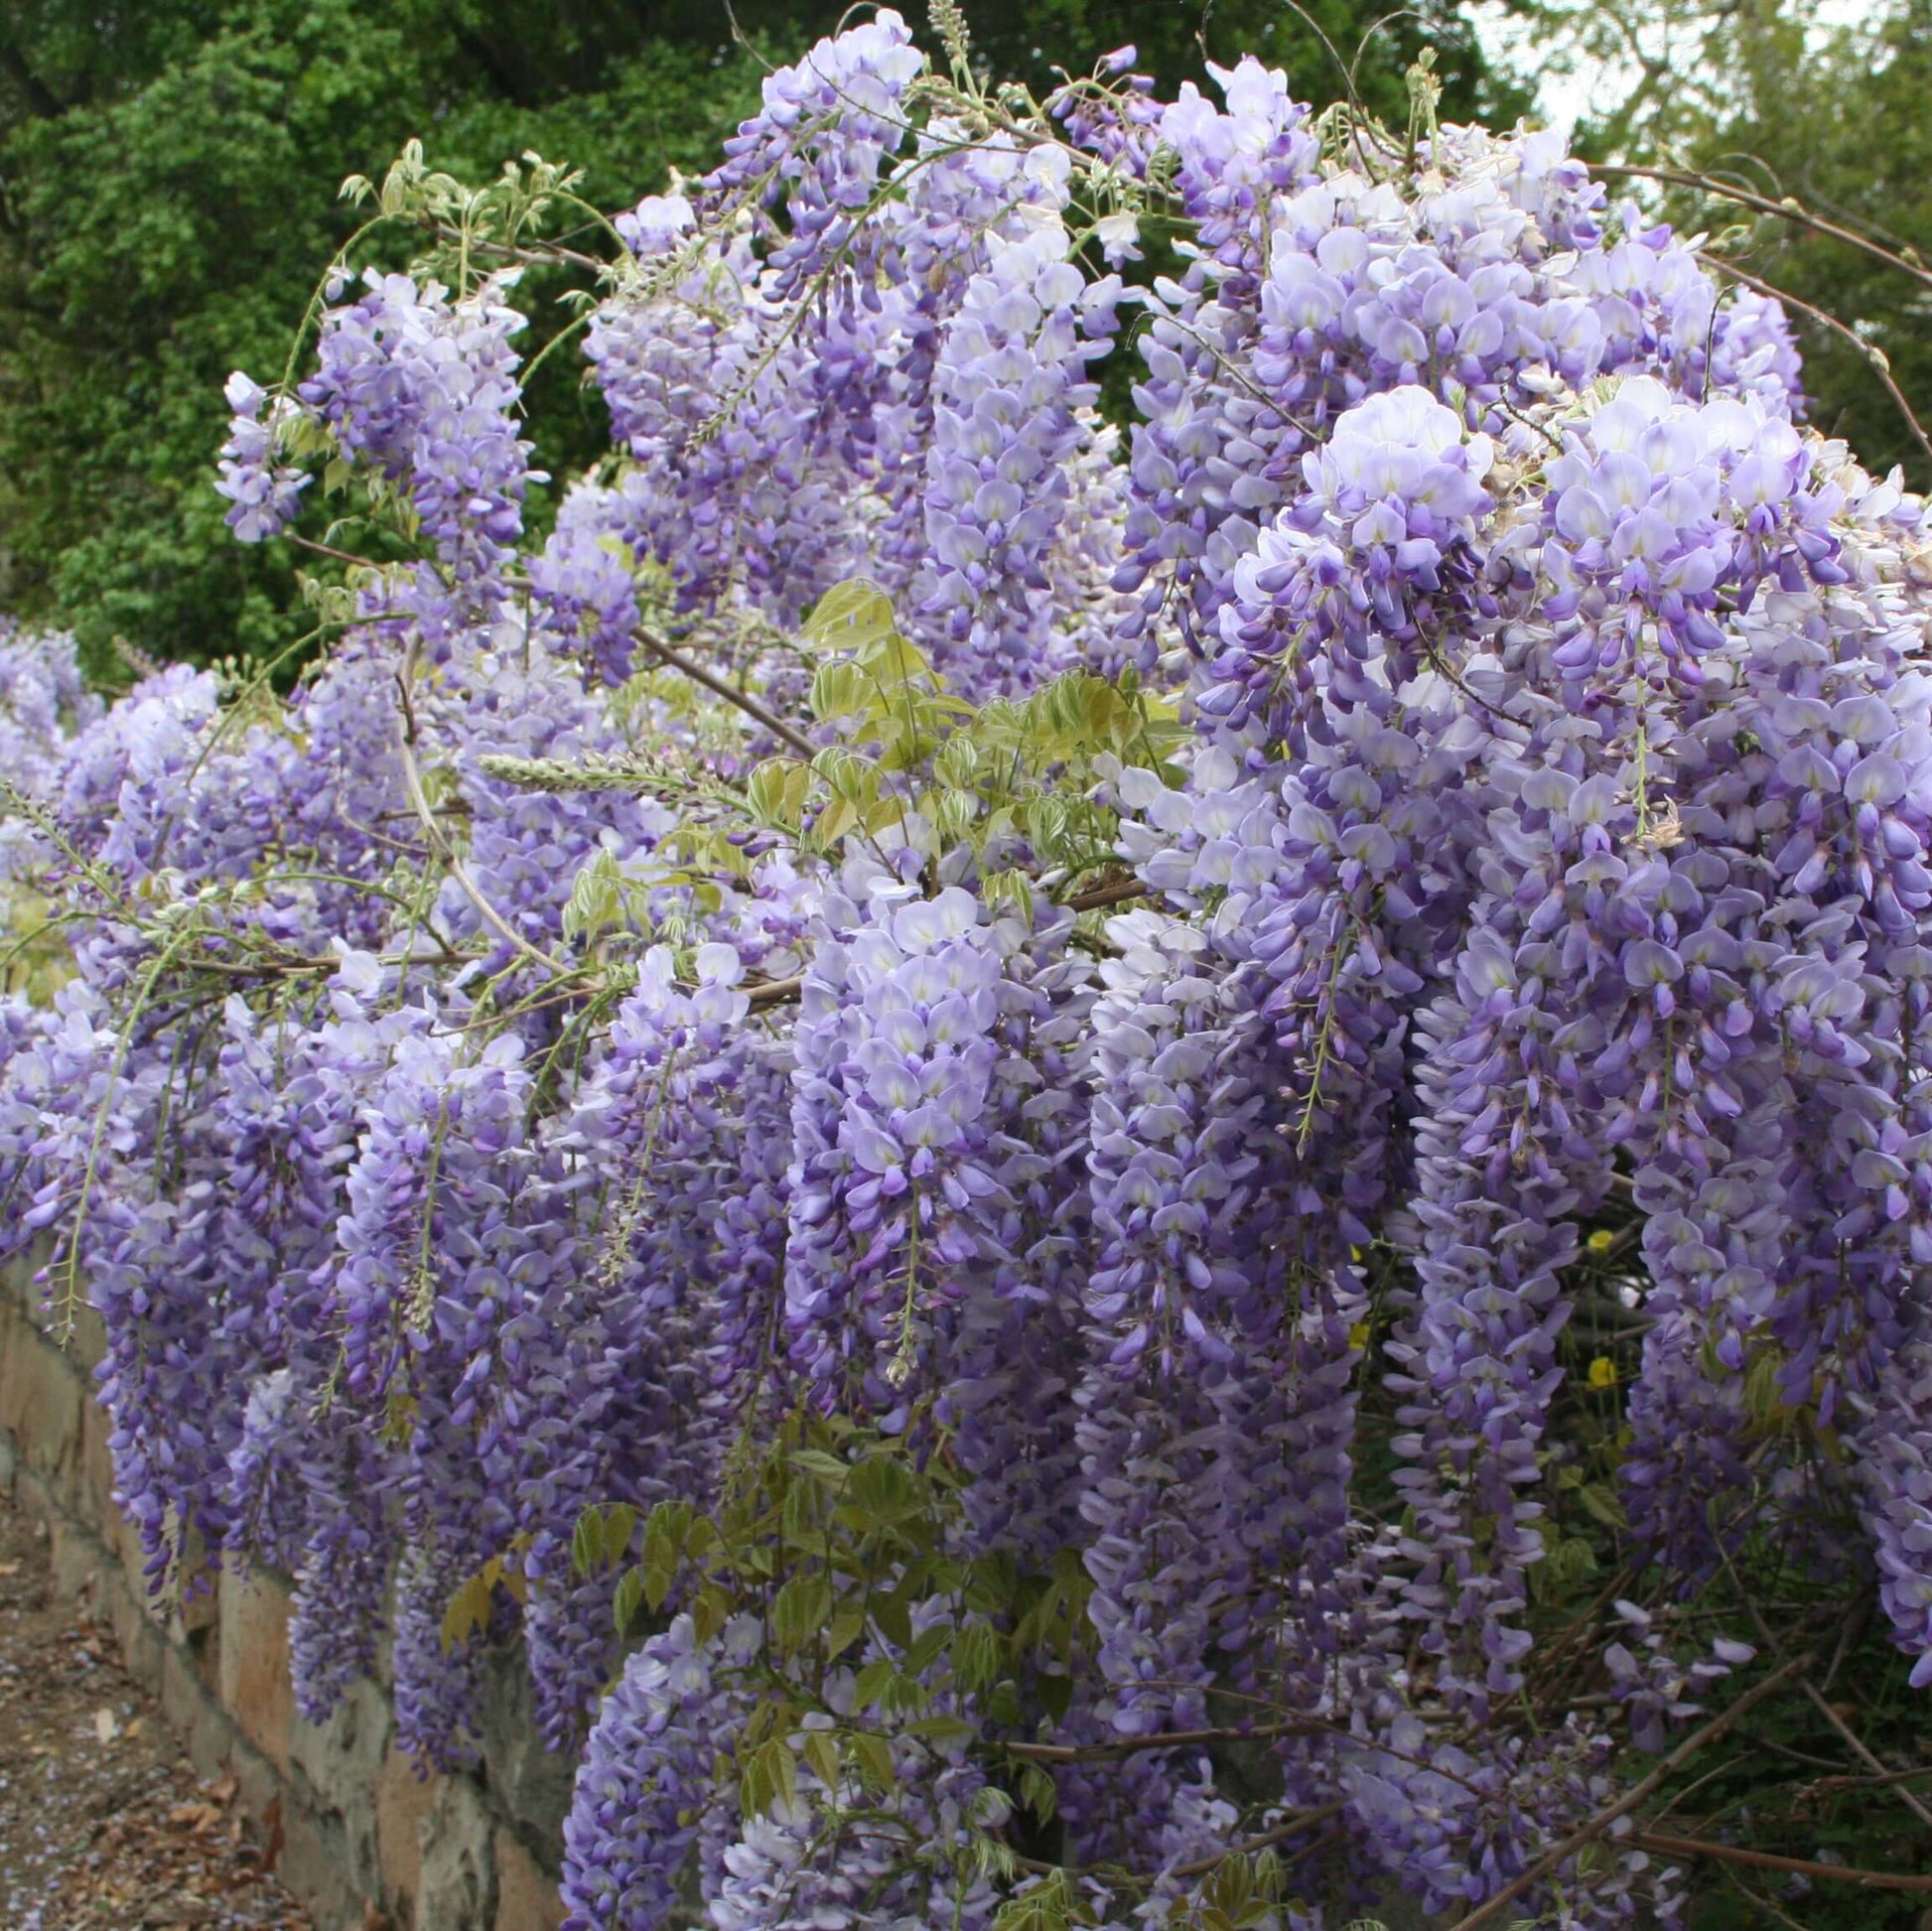 The Great Purple Wisteria  Purple wisteria, Wisteria tree, Wisteria japan